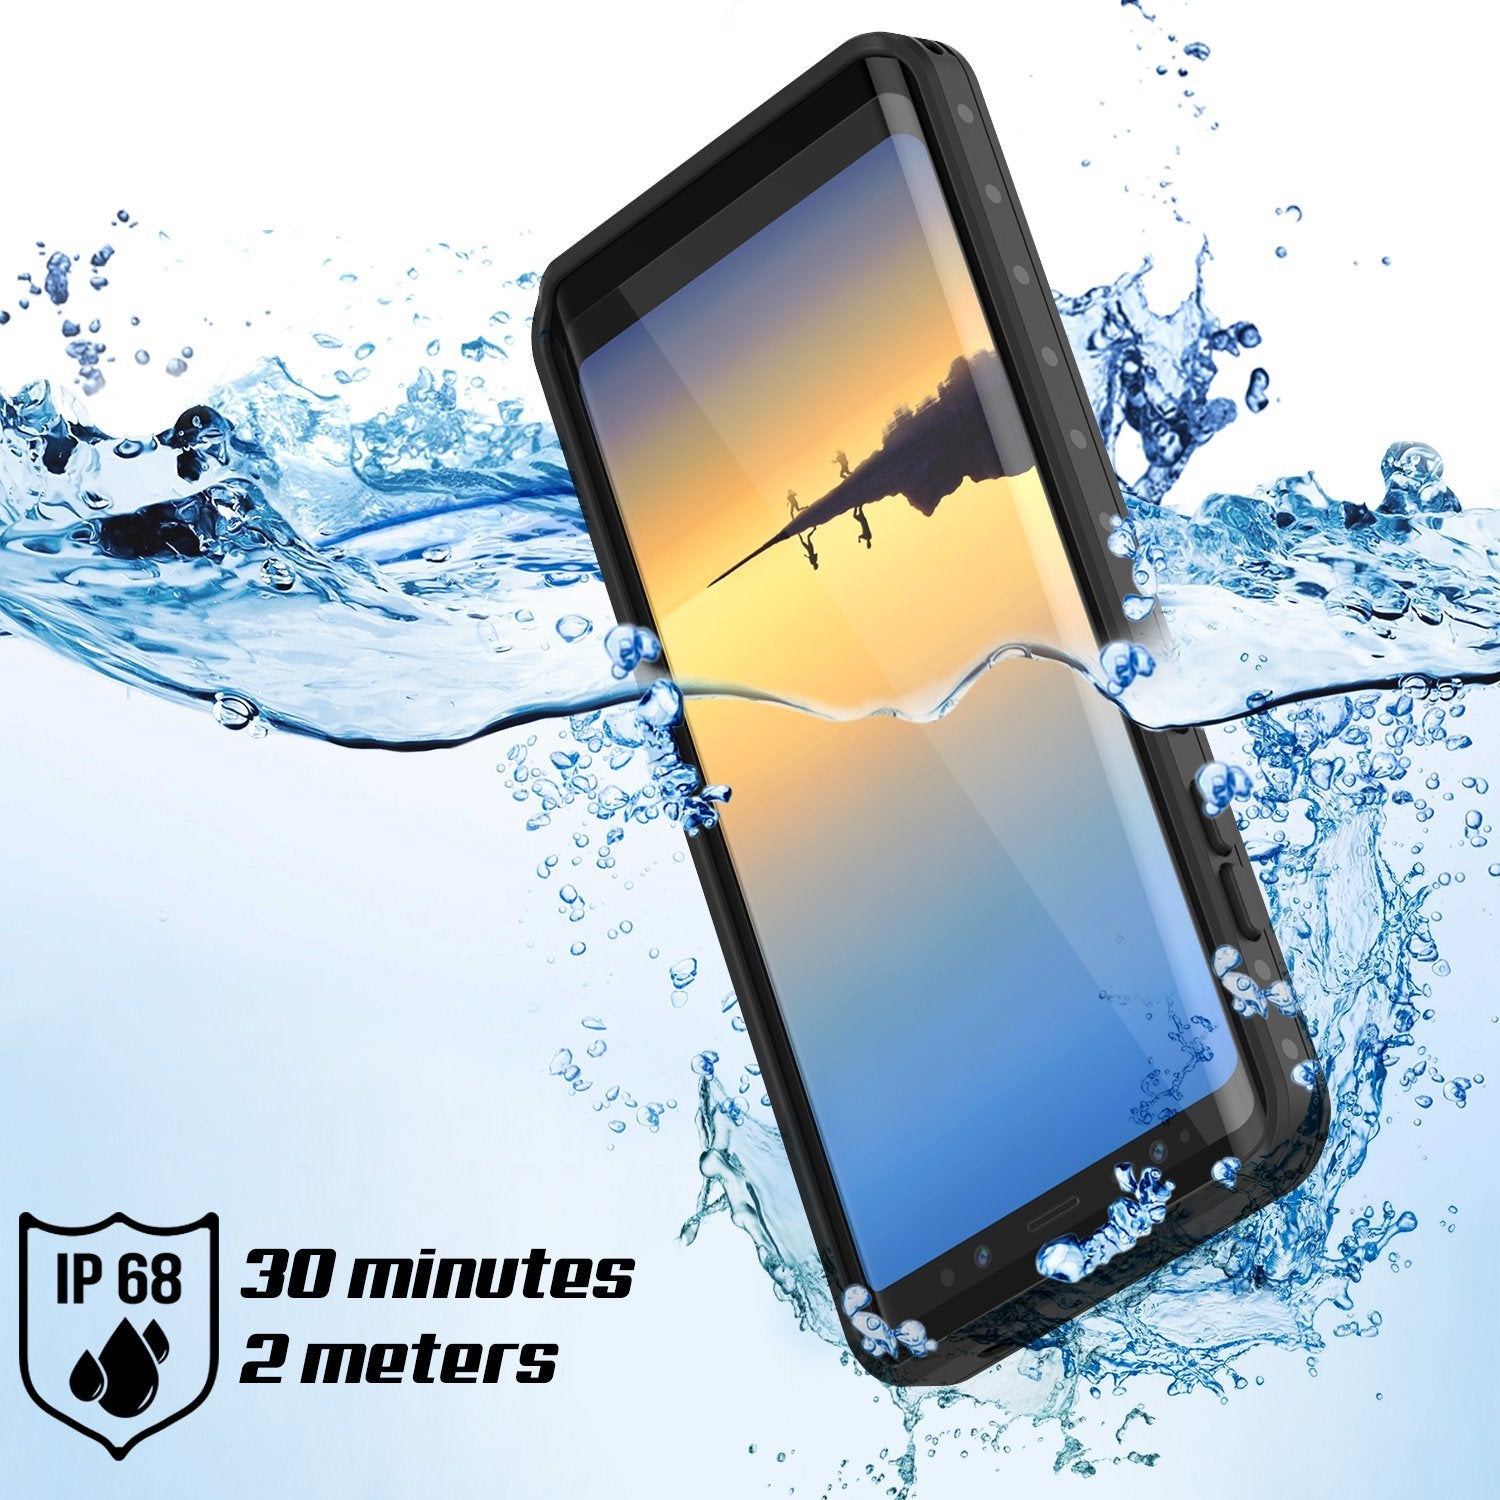 Galaxy Note 8 Waterproof Case Punkсase StudStar Clear Thin 6.6ft Underwater IP68 Shock/Snow Proof - PunkCase NZ